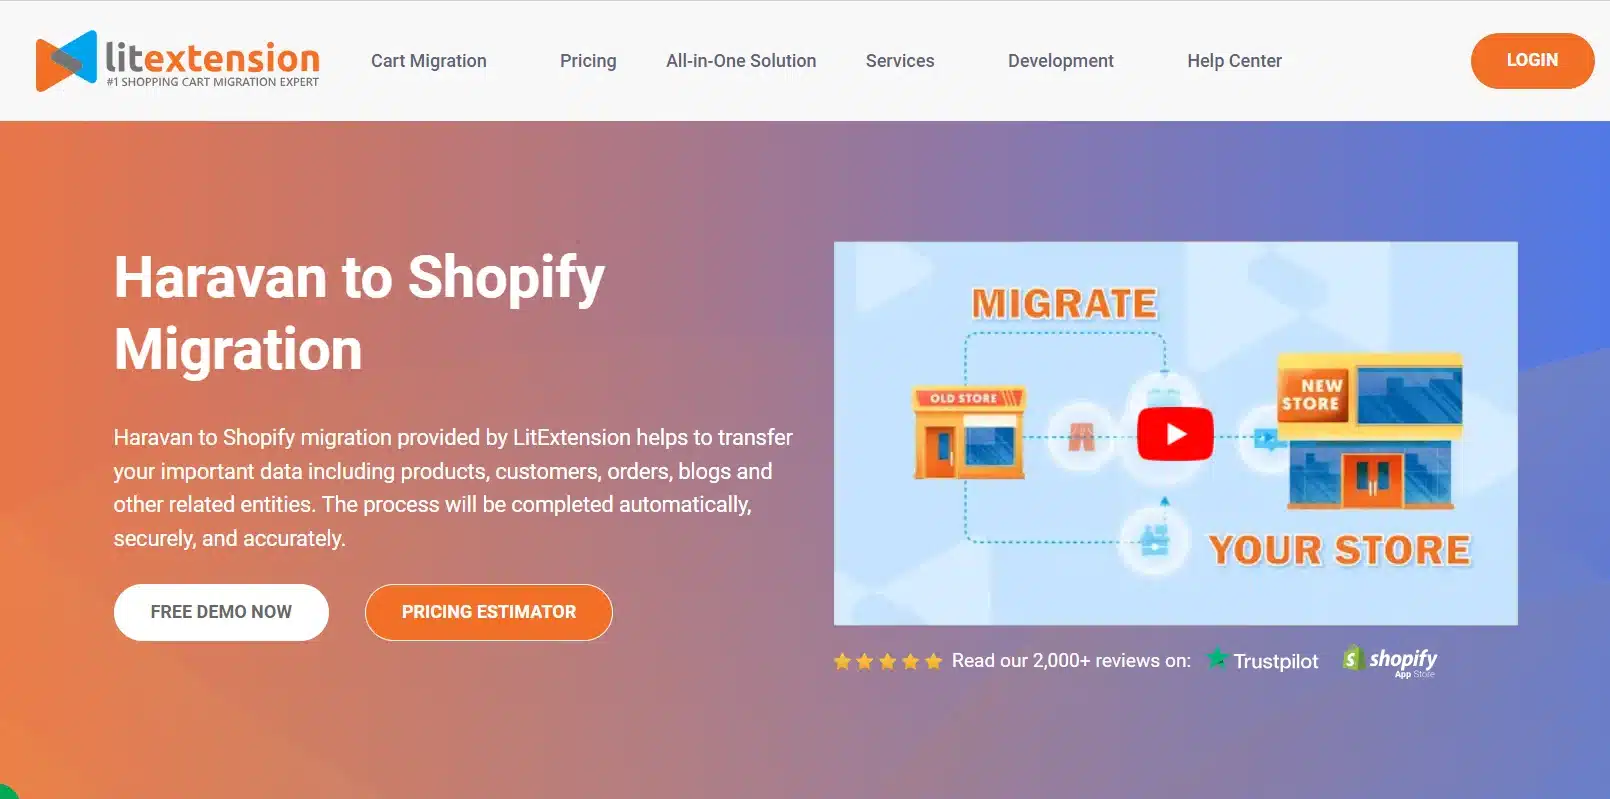 Haravan to Shopify migration